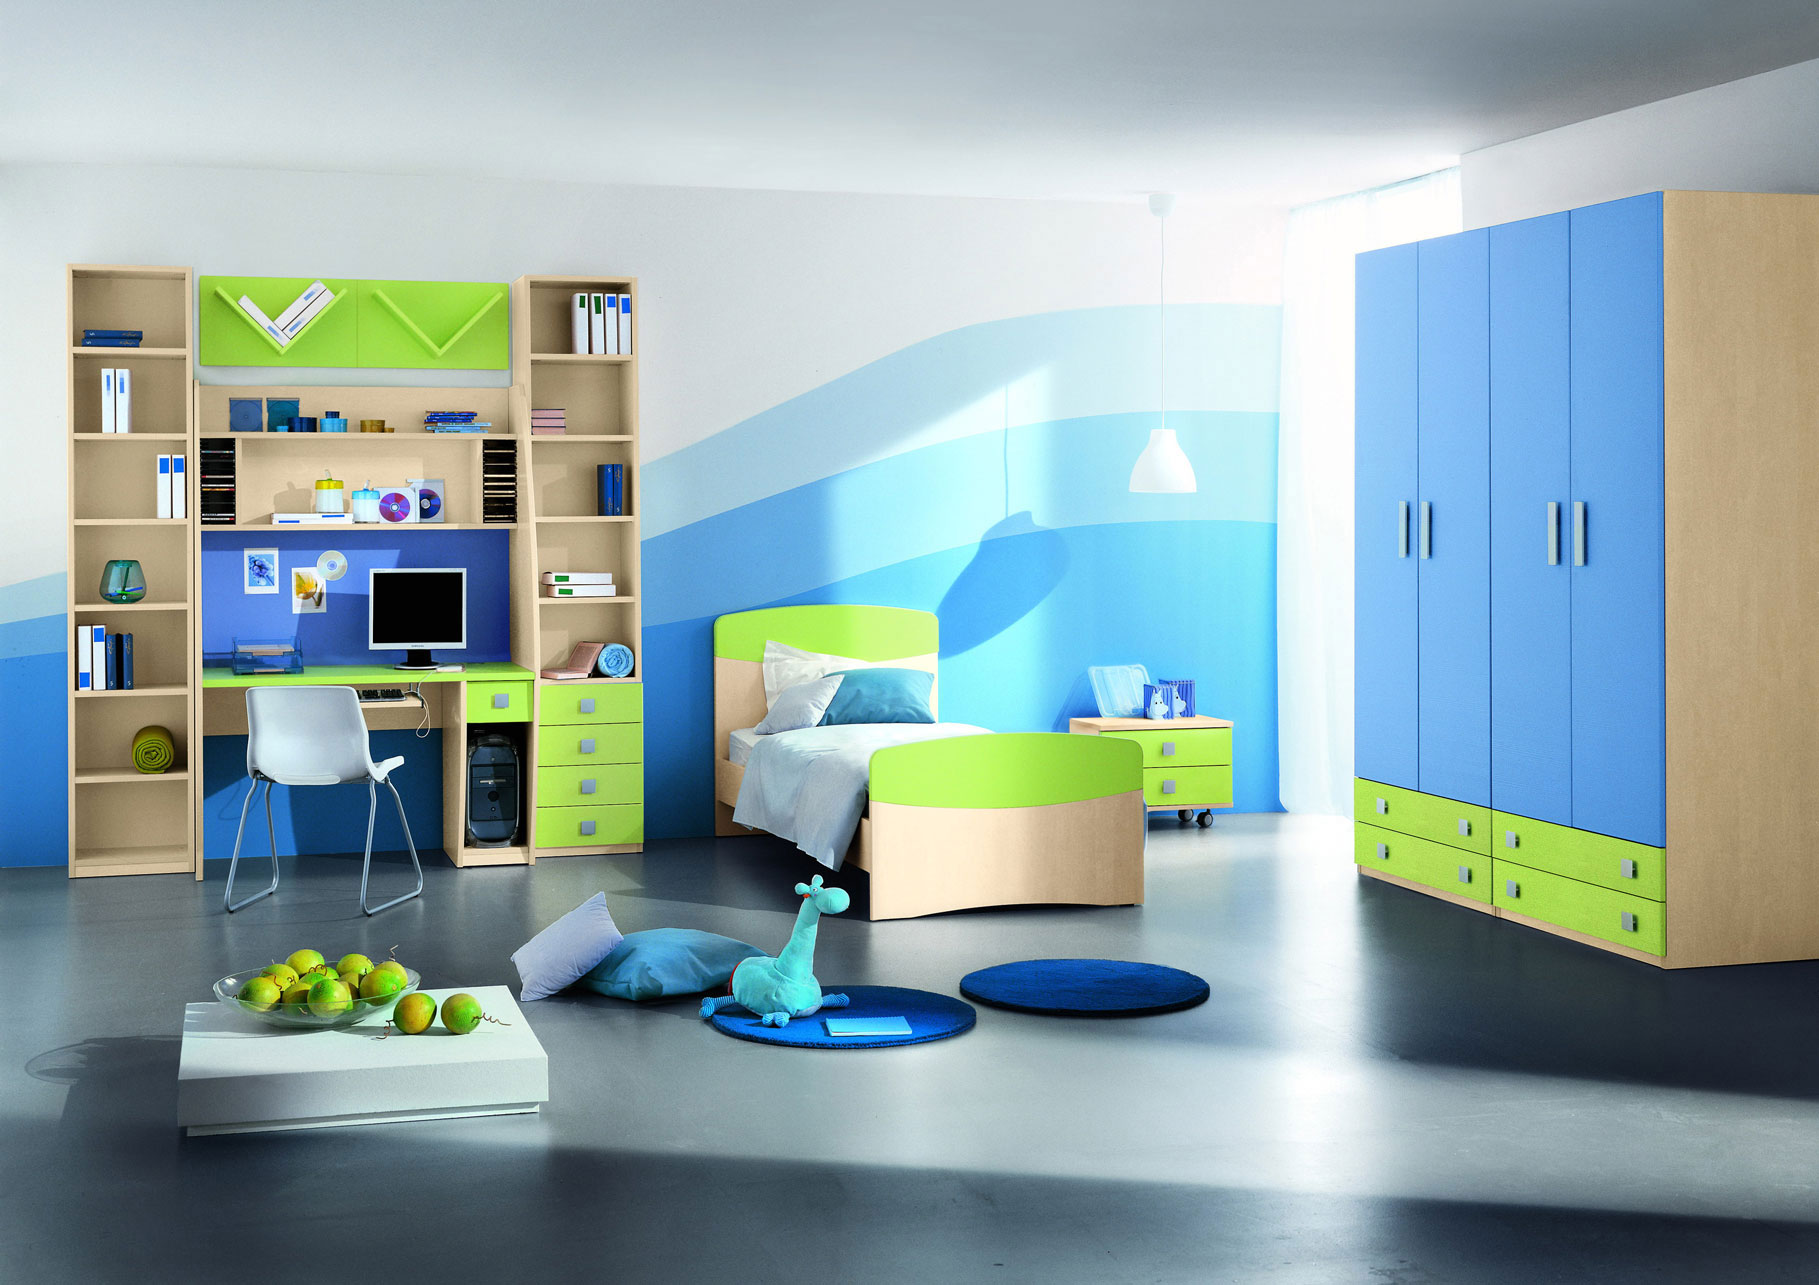 blue kids room